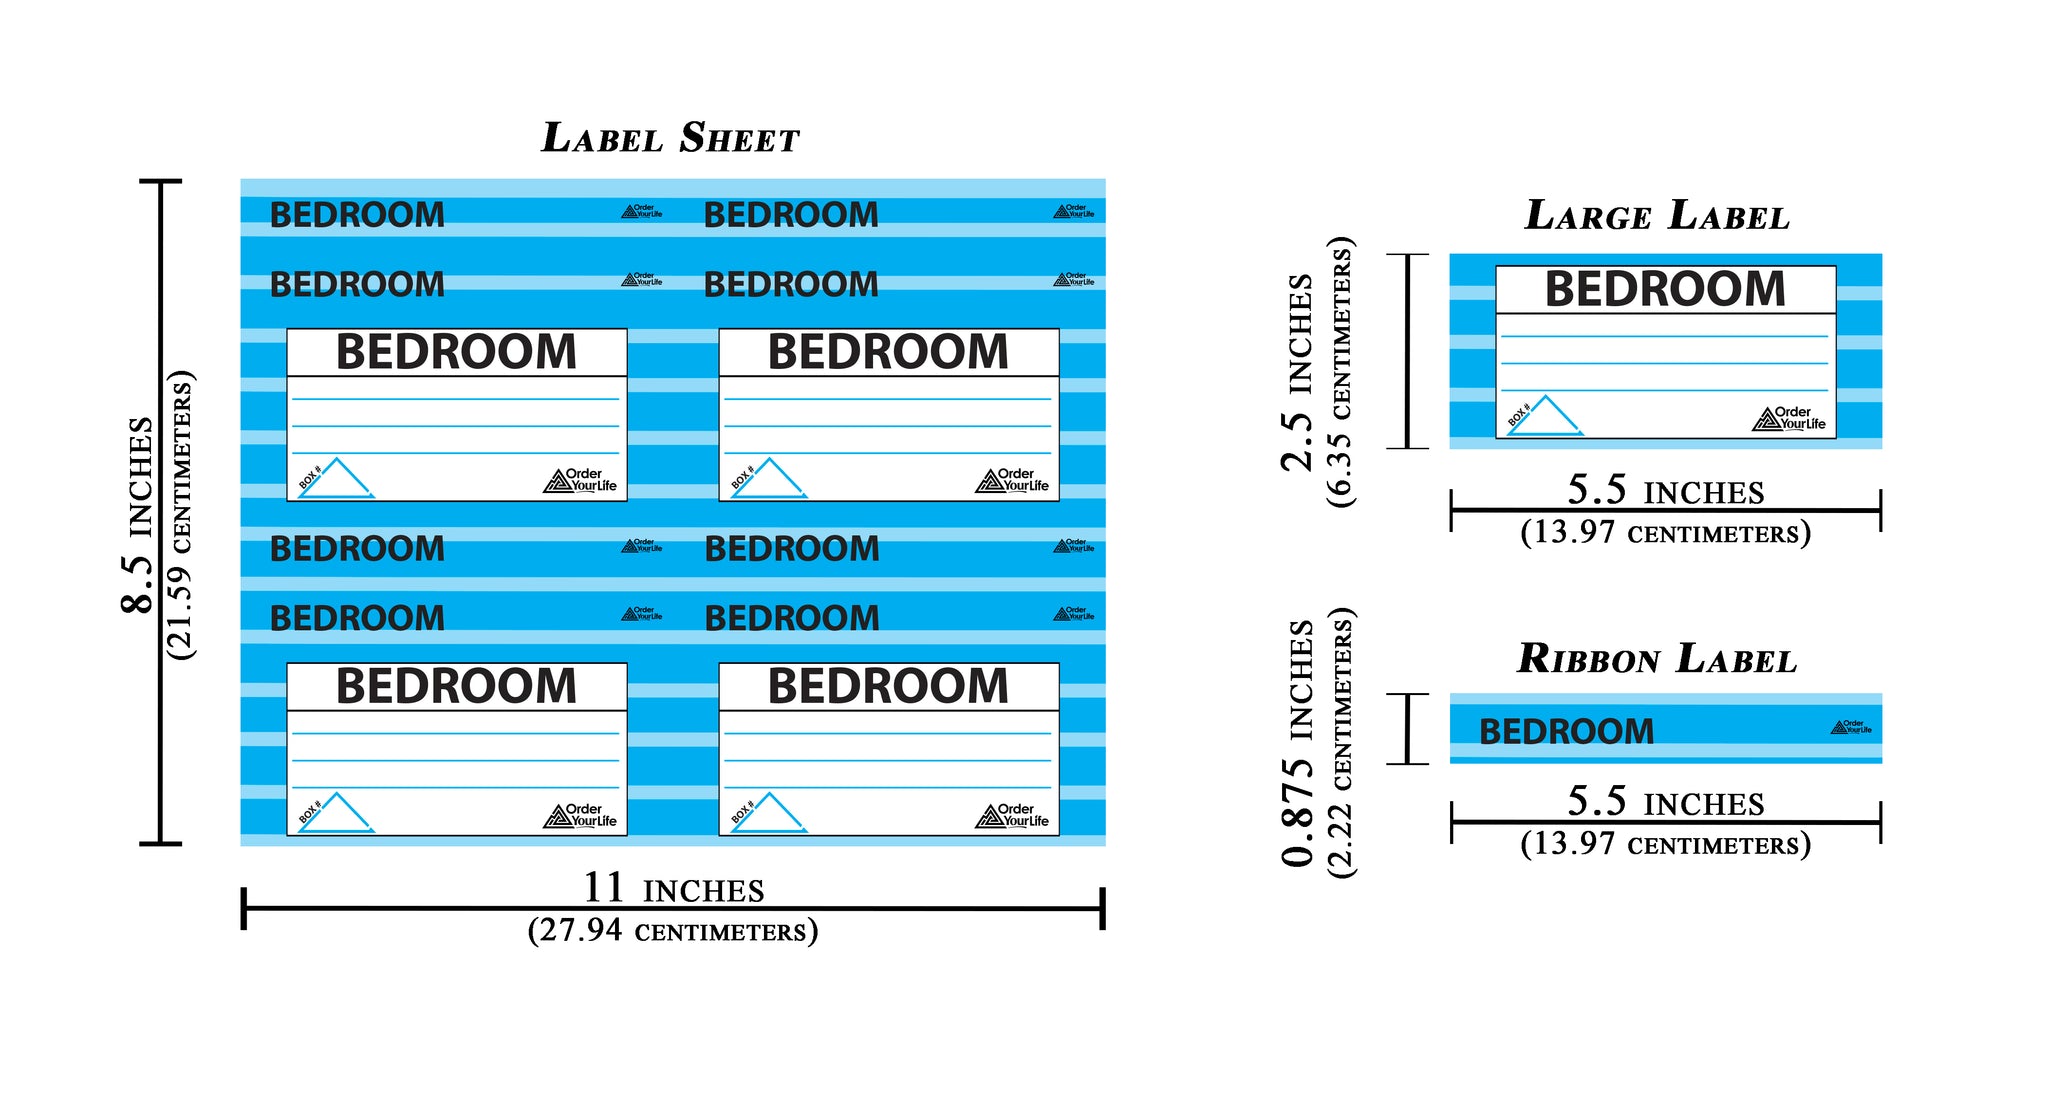 4 Bedroom Labels (Moving Labels Only)